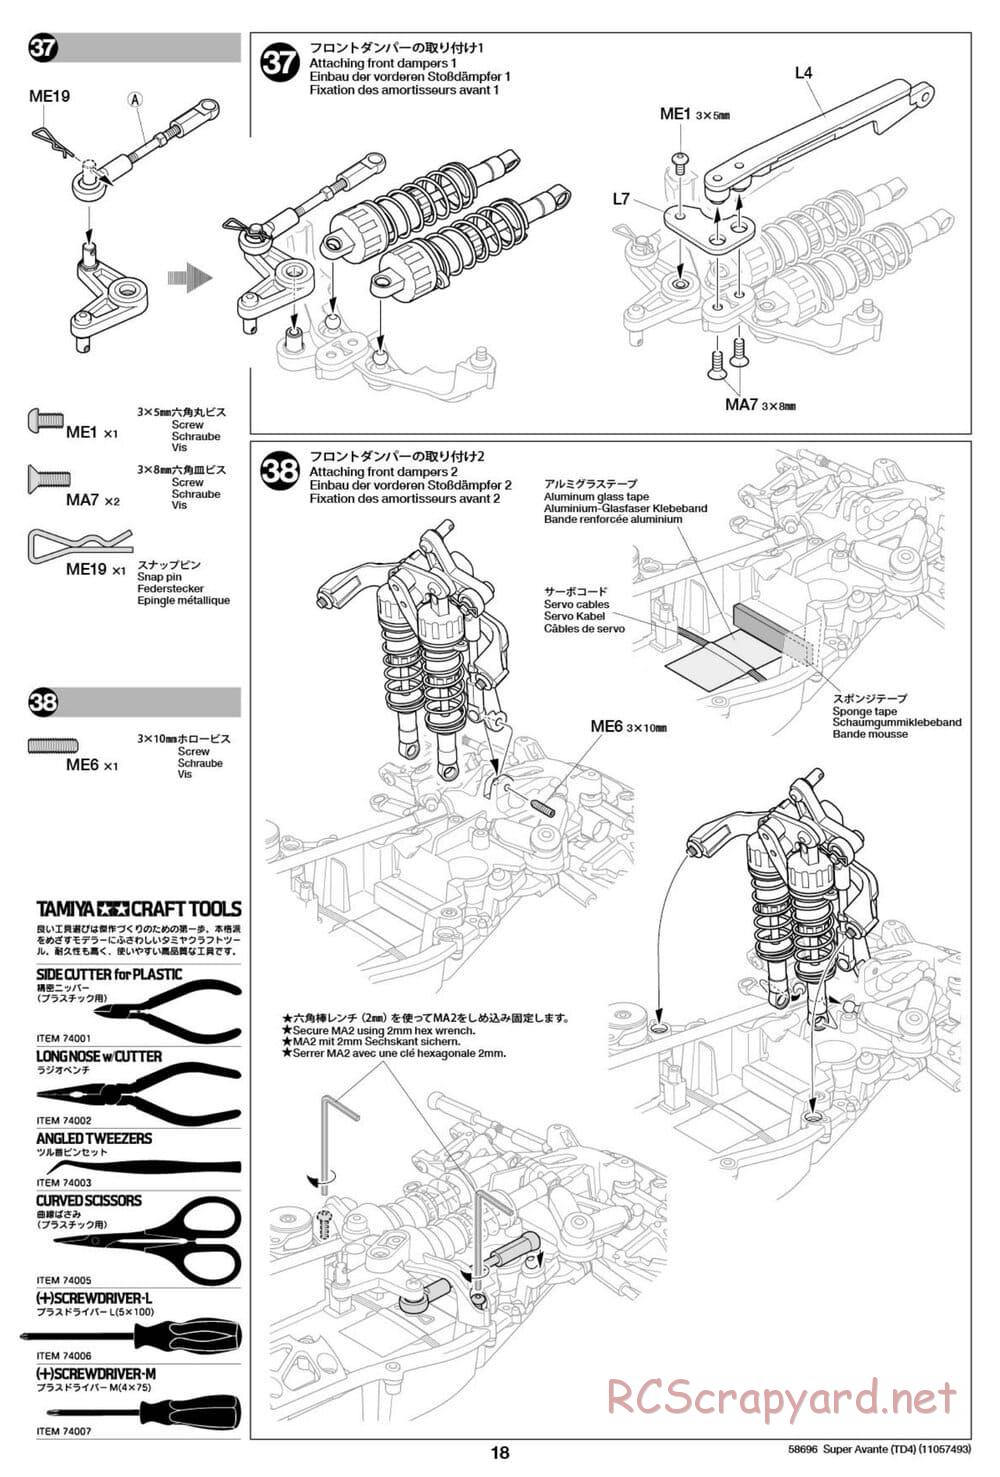 Tamiya - Super Avante - TD4 Chassis - Manual - Page 19